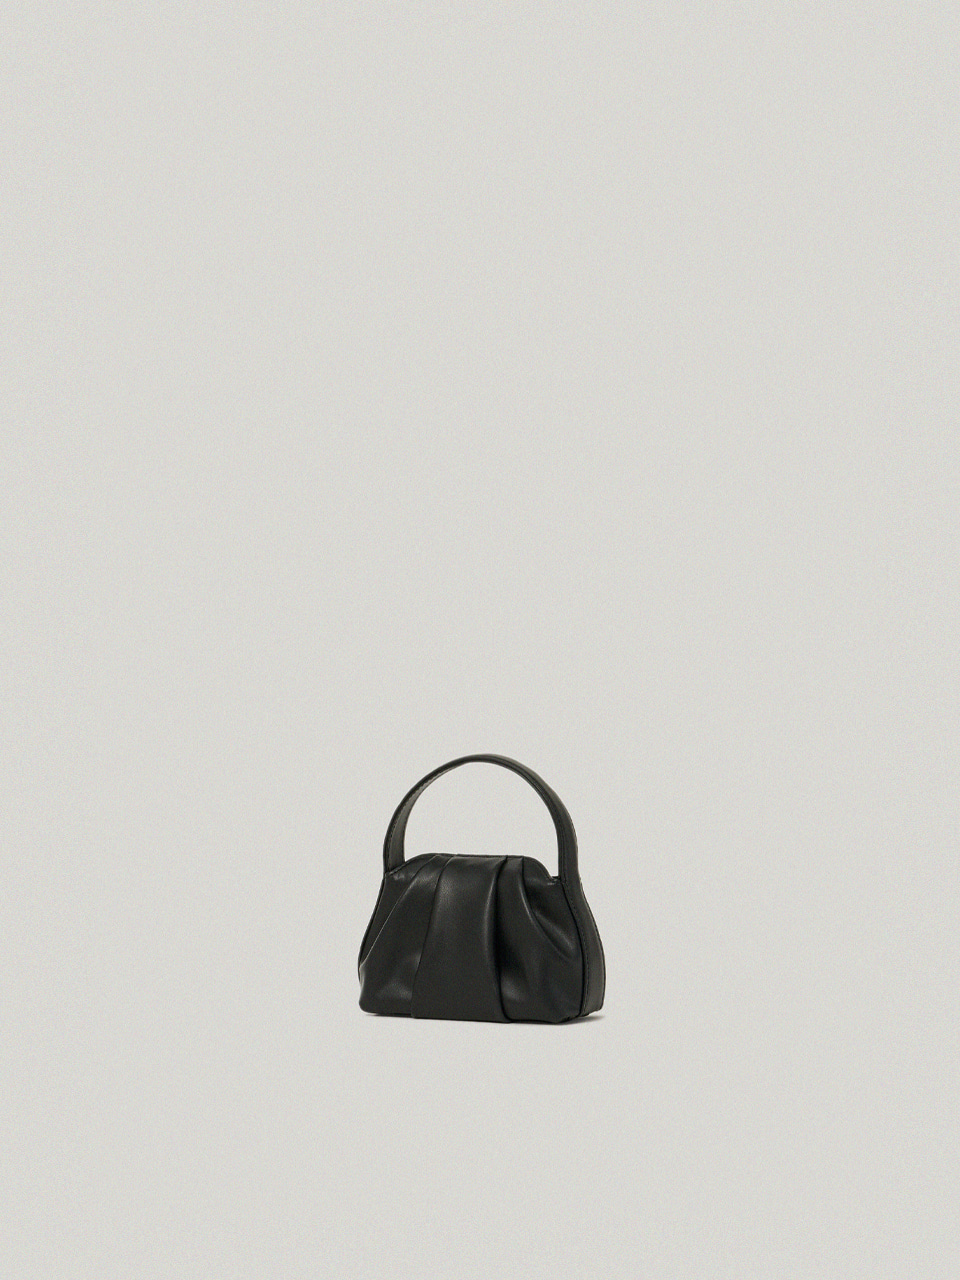 Fantine Petit Bag / Soft Black